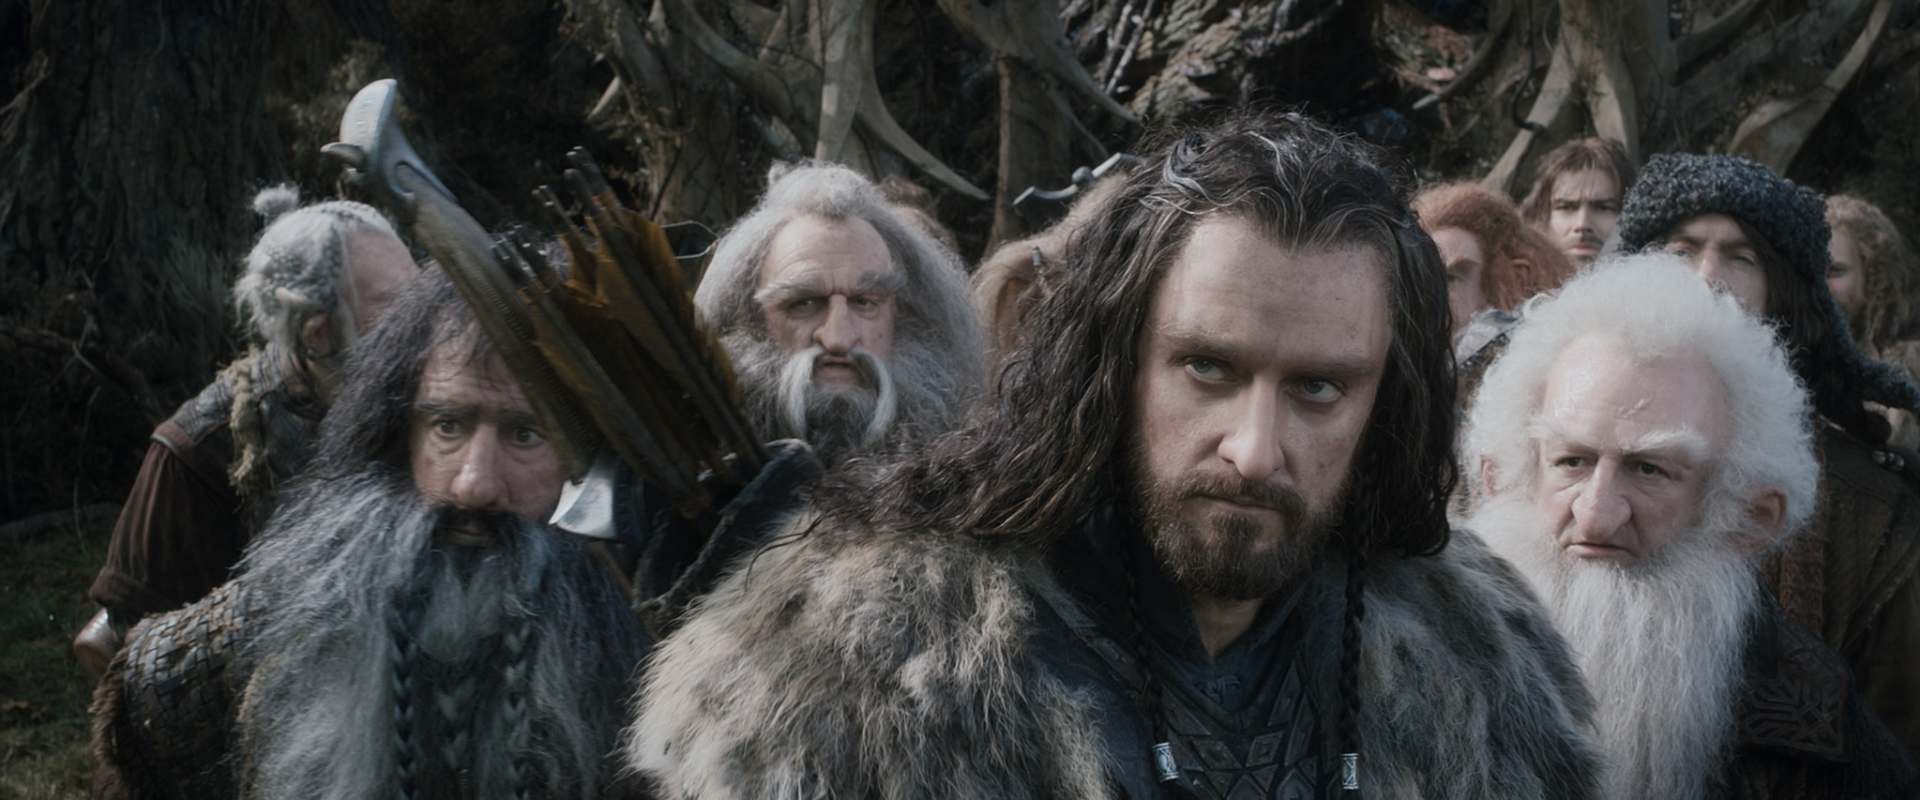 The Hobbit: The Desolation of Smaug background 2